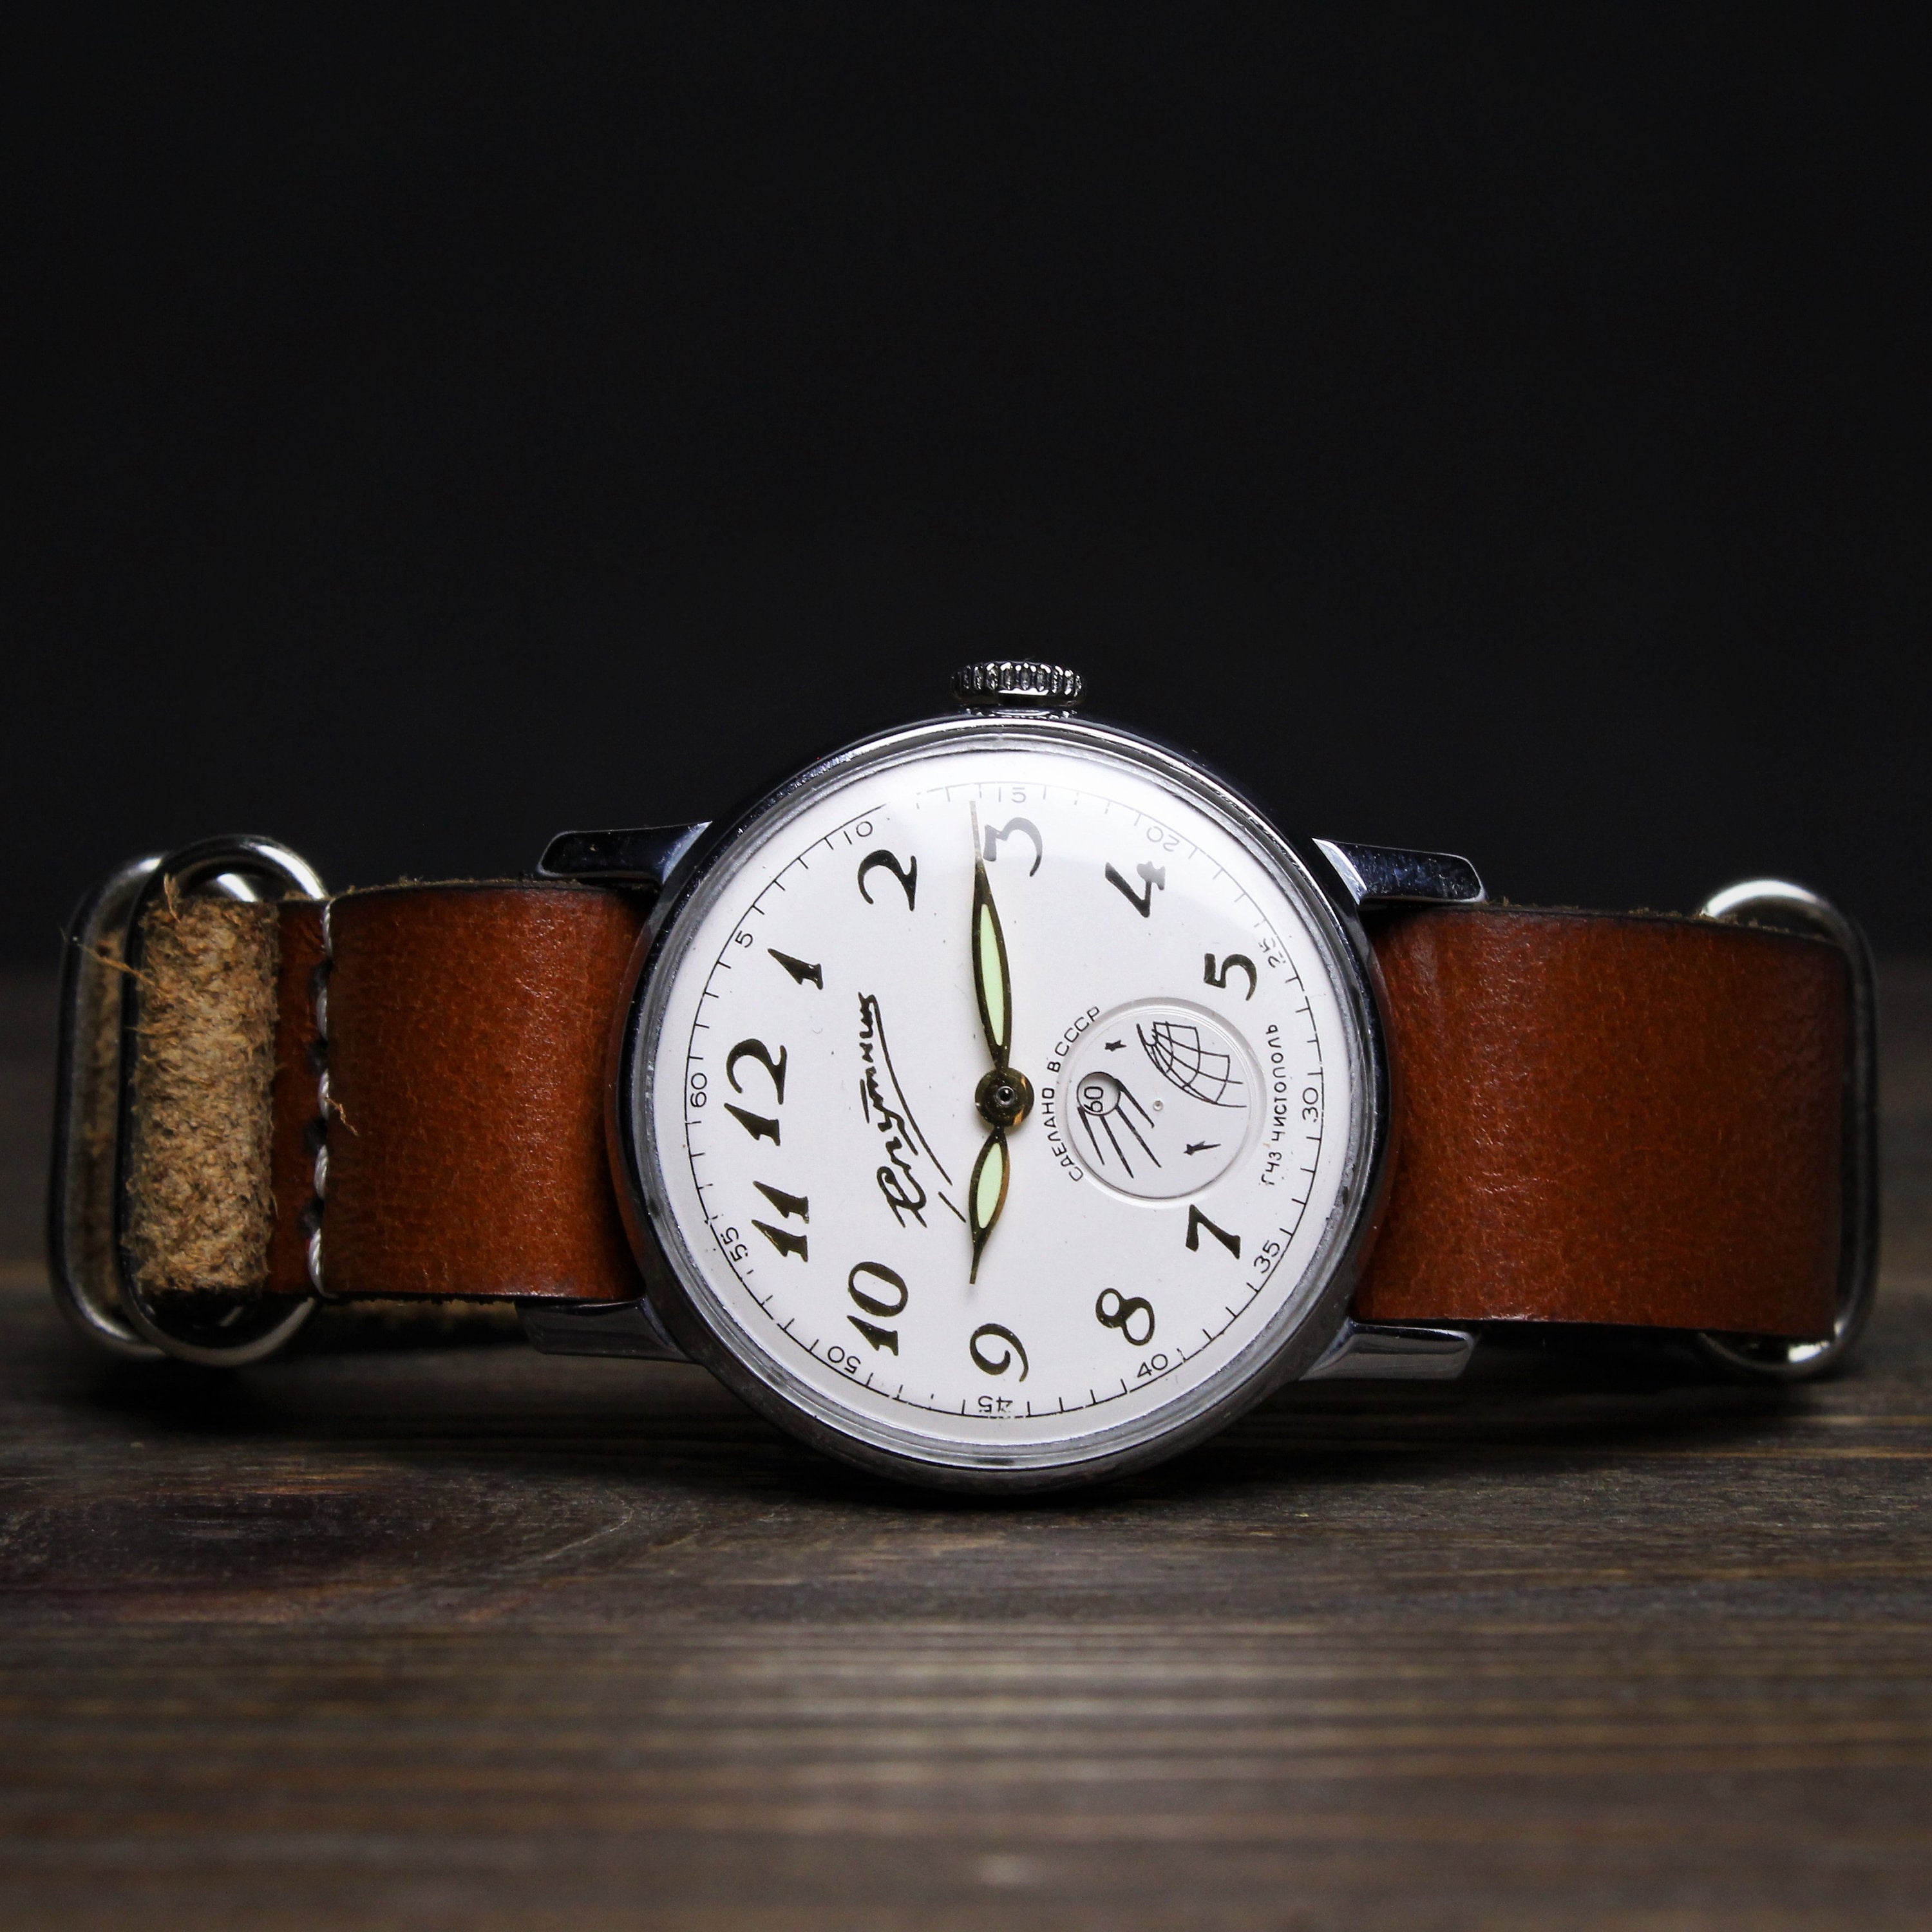 Very rare mechanical soviet vintage wrist watch for men Sputnik with leather nato strap